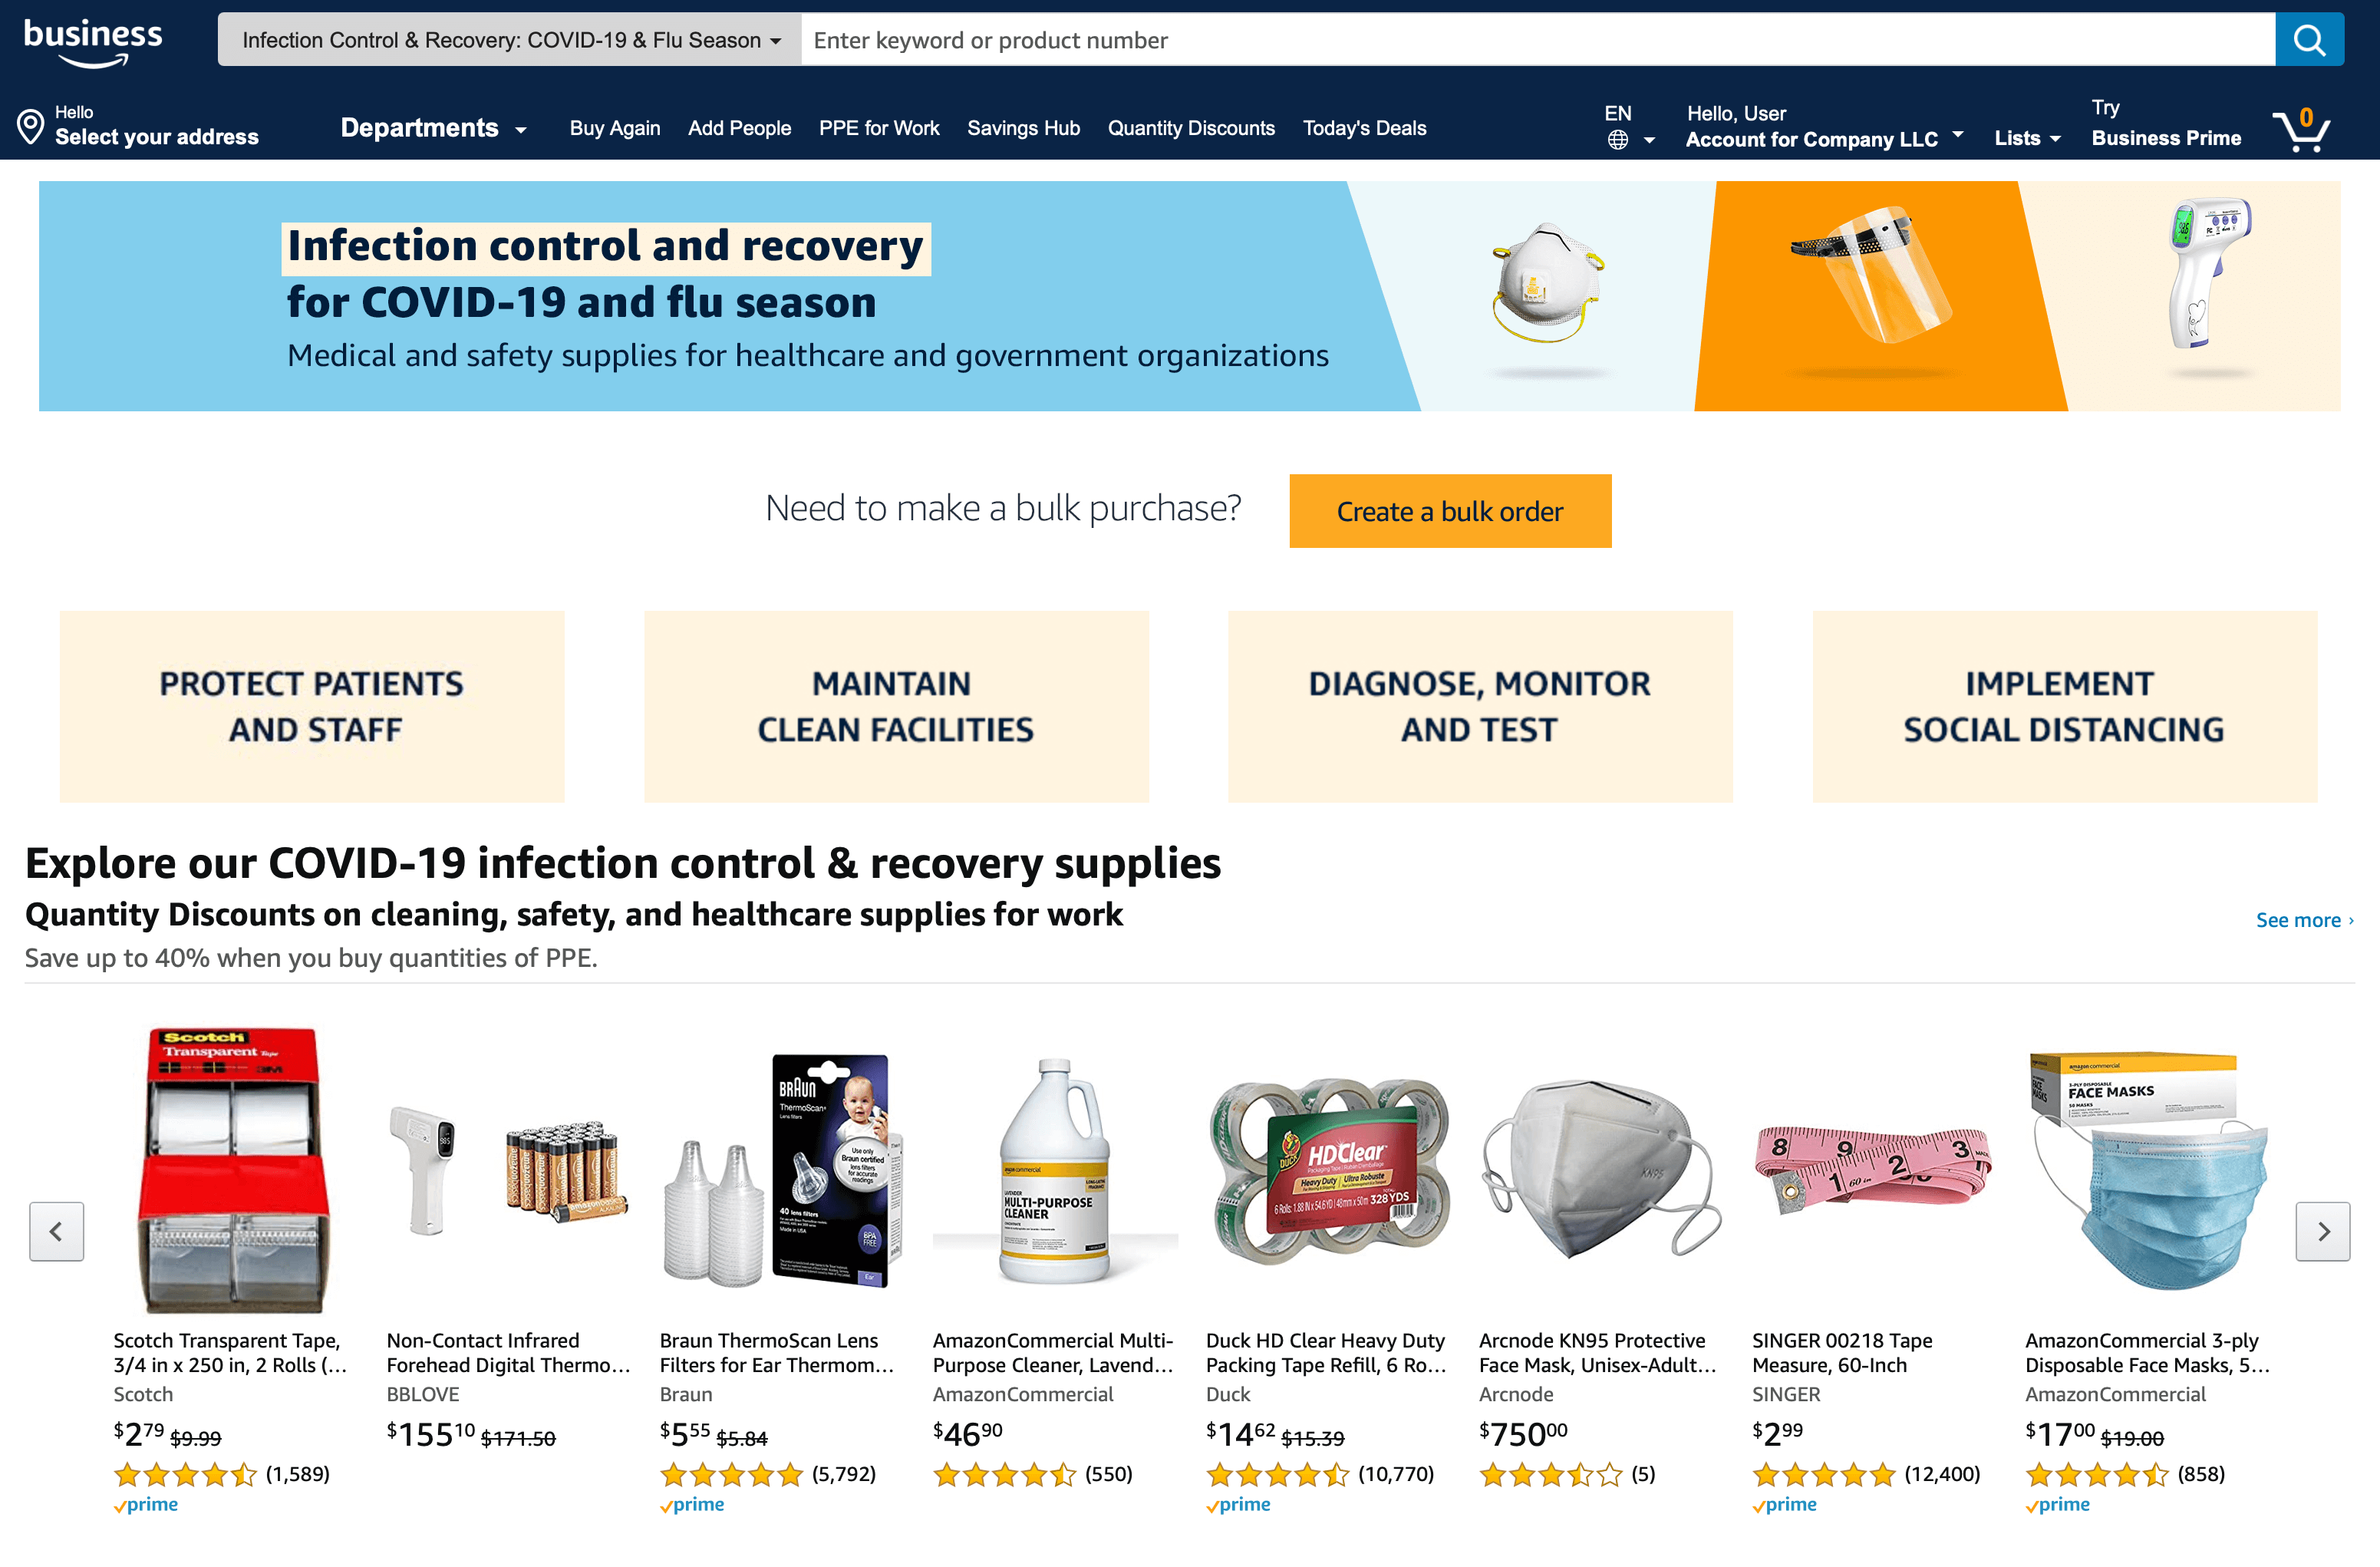 Top B2B eCommerce Company: Amazon Business